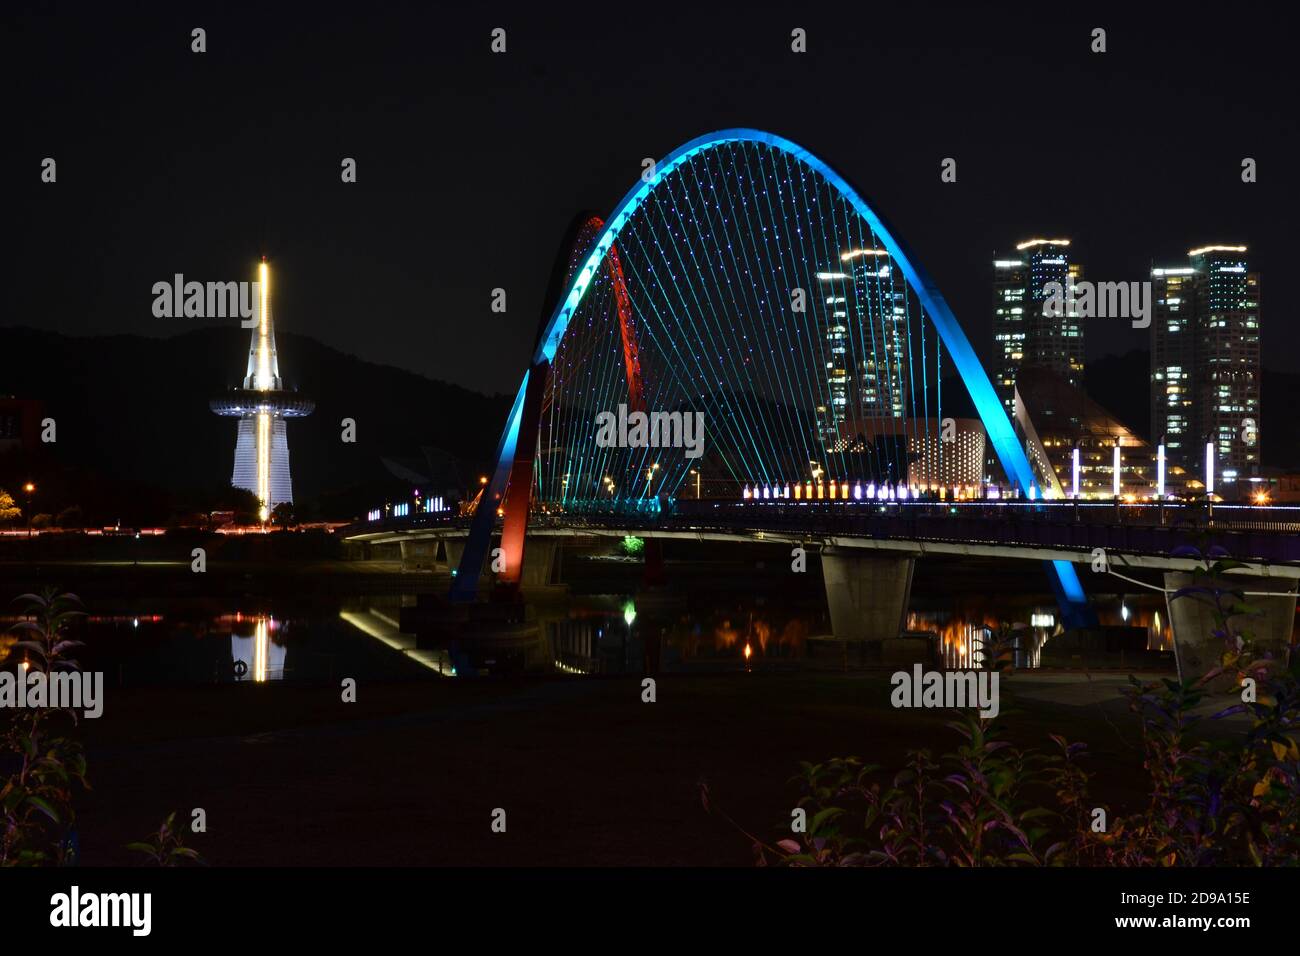 Night view of the Expo Bridge in Daejeon, South Korea Stock Photo